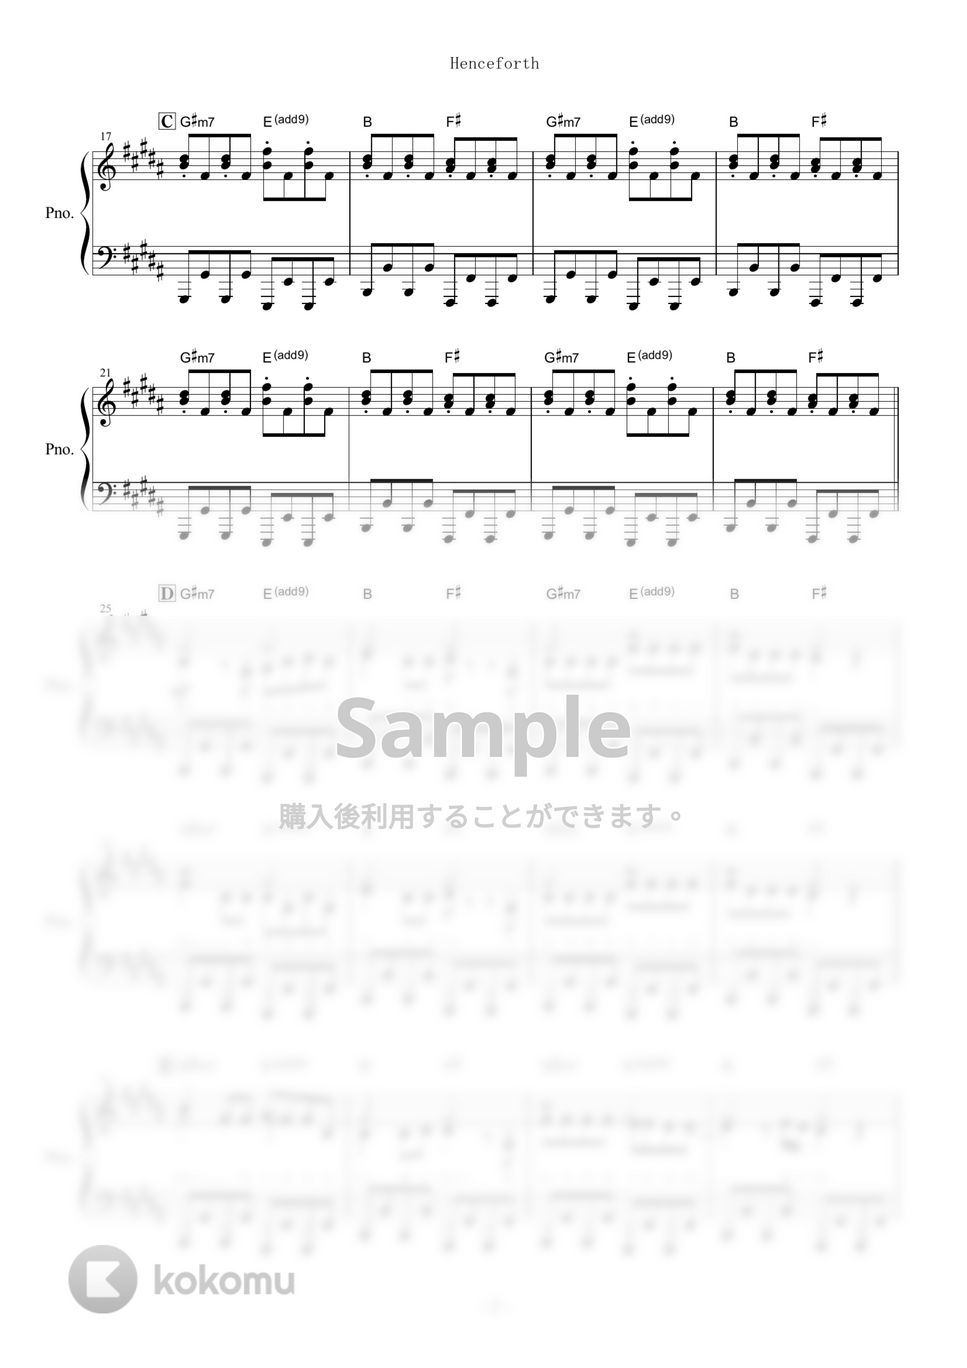 Orangestar feat.IA - Henceforth (ピアノ楽譜/全8ページ) by yoshi